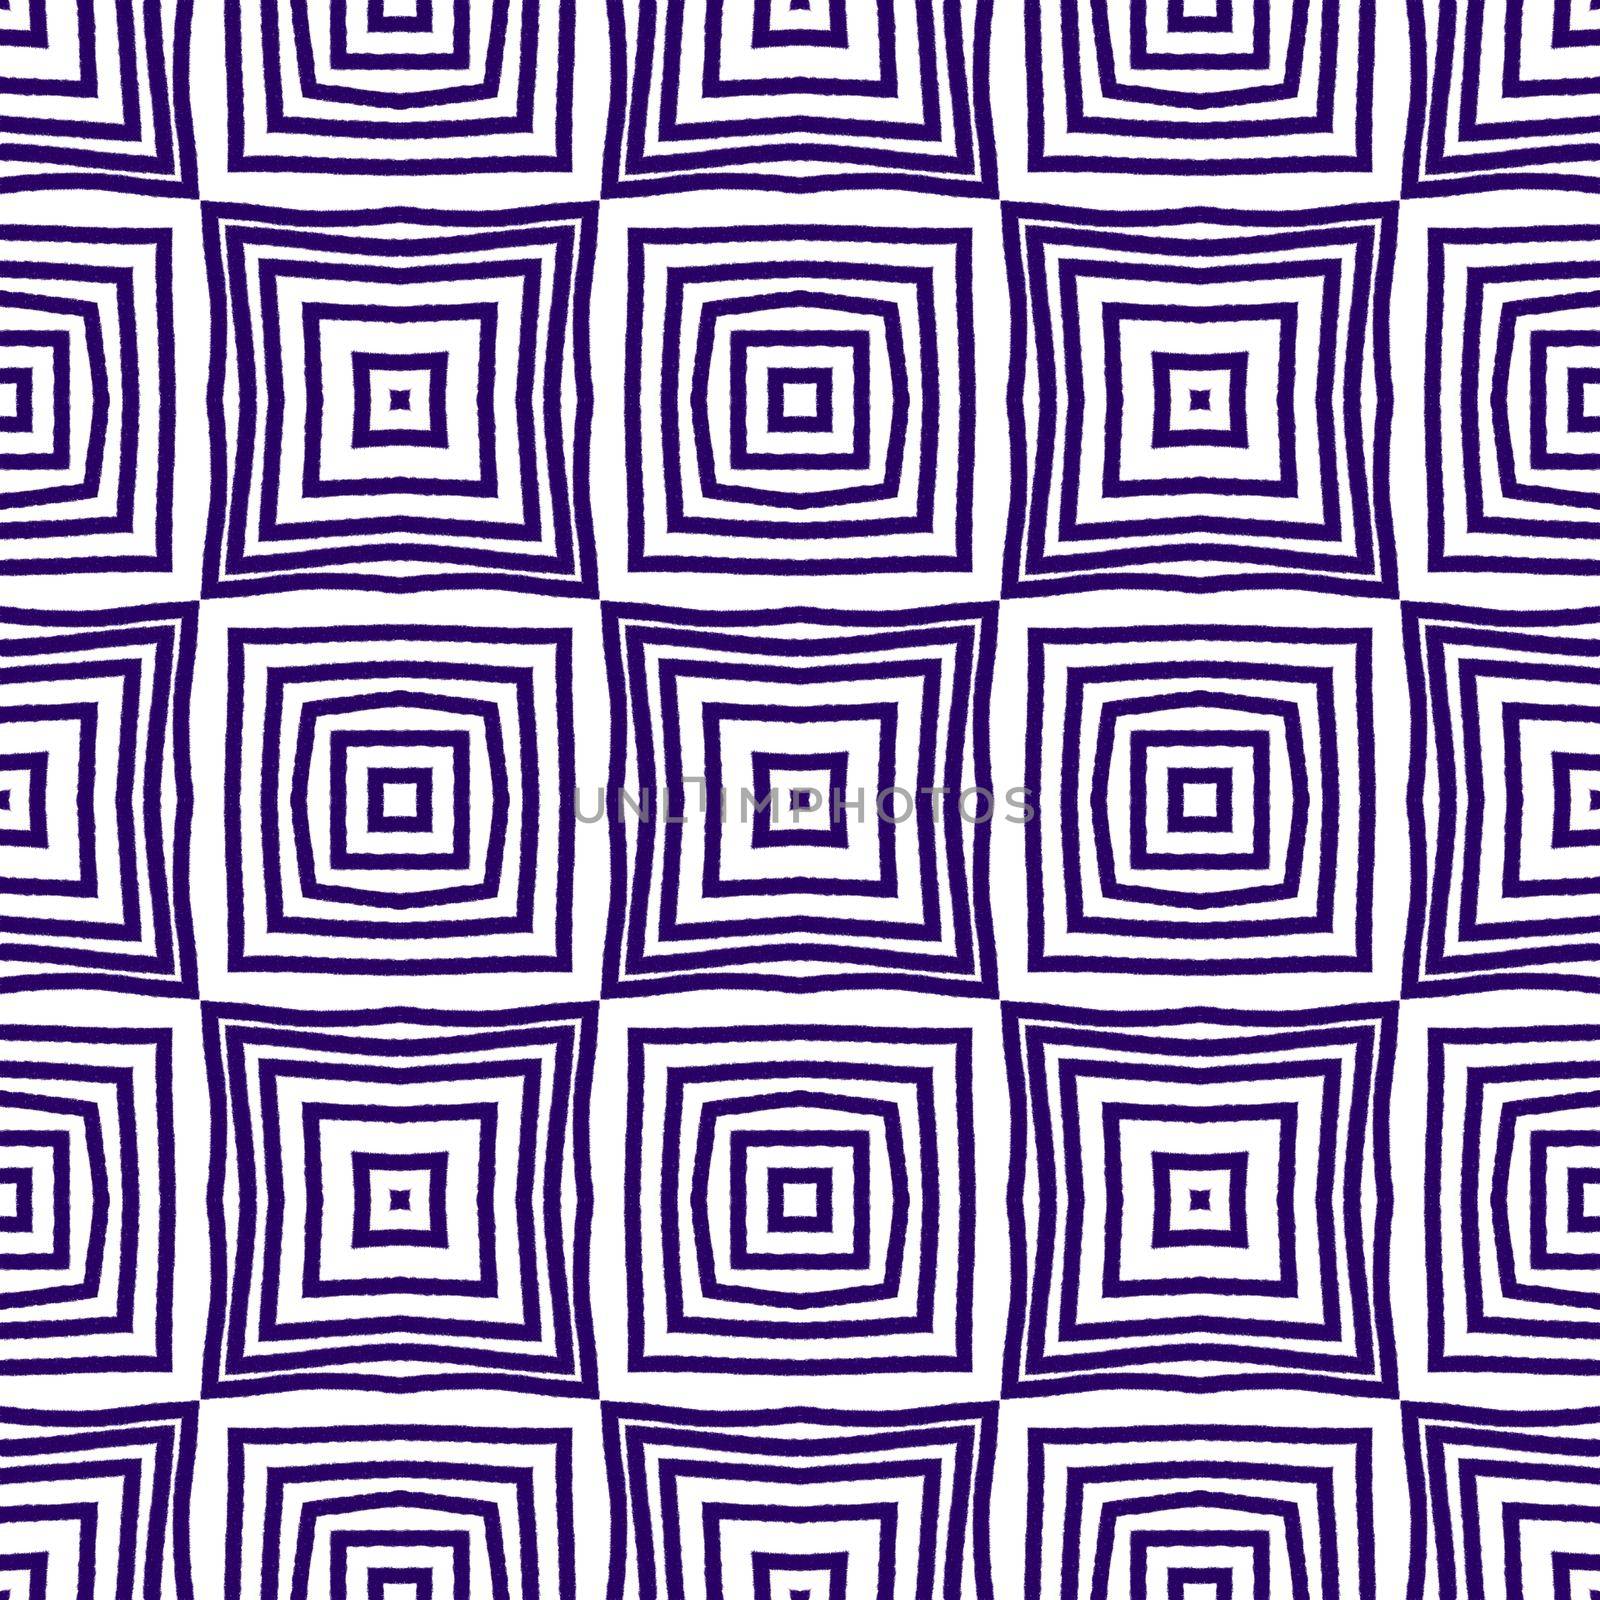 Medallion seamless pattern. Purple symmetrical by beginagain